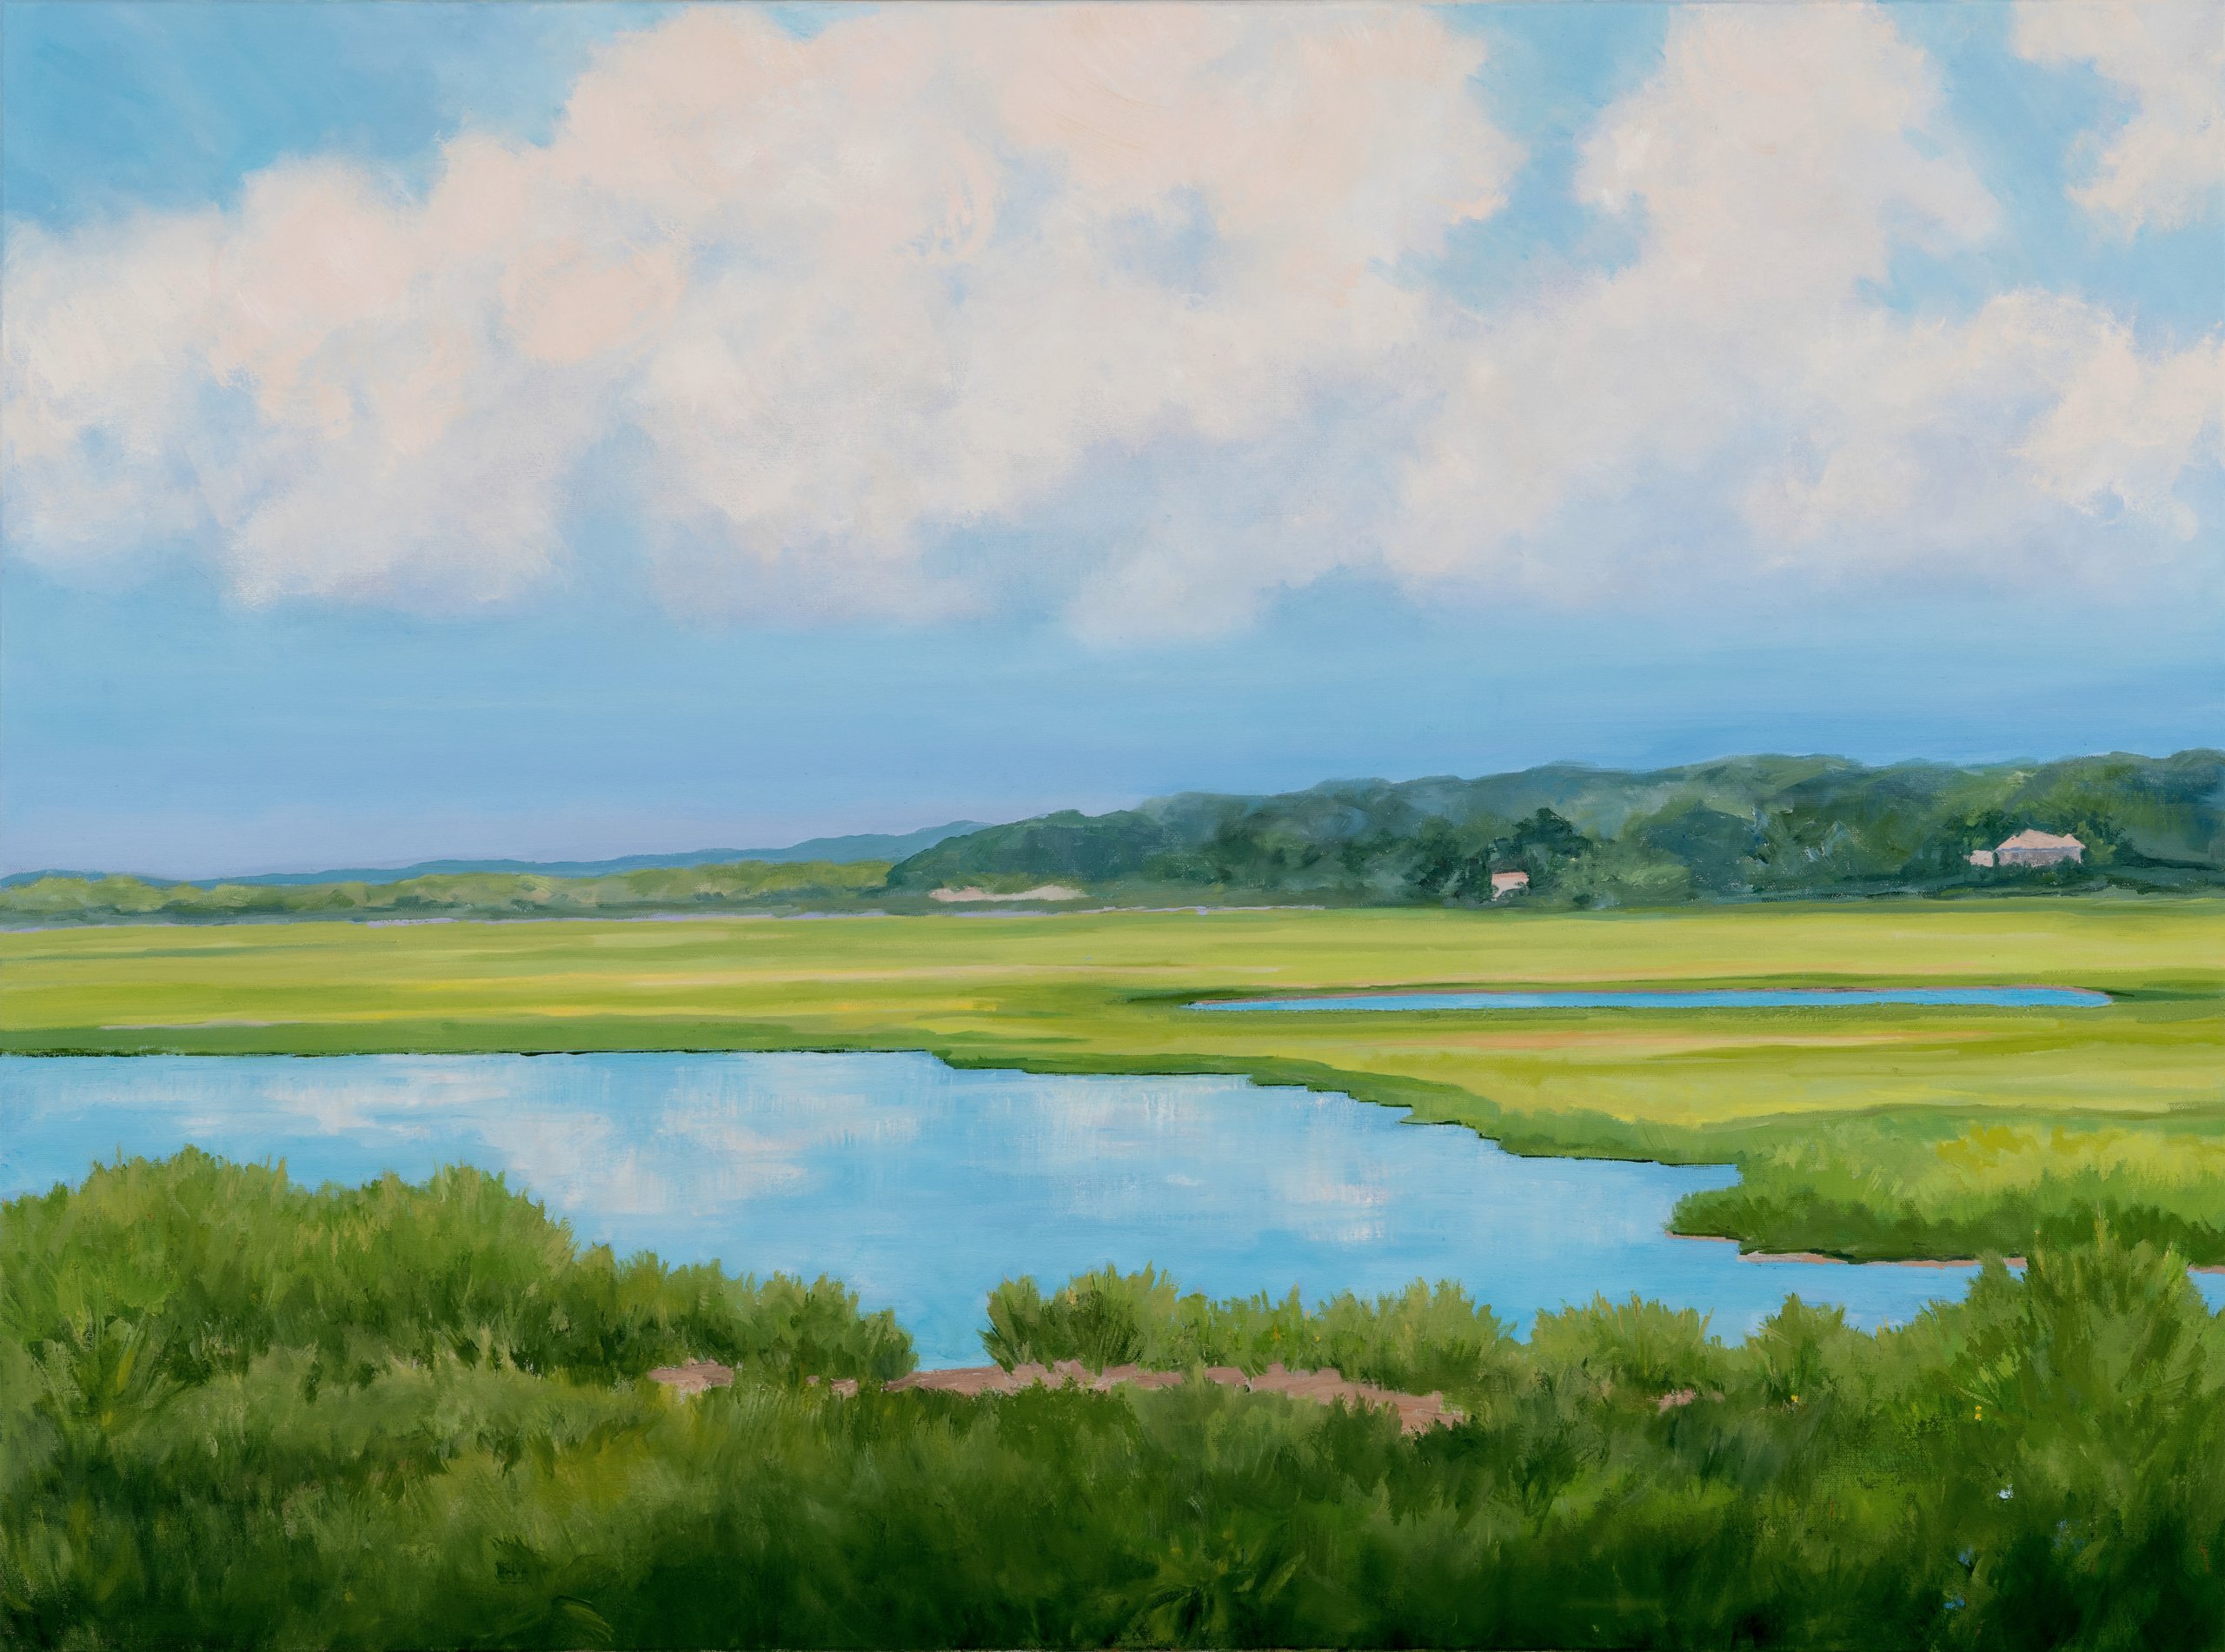 "Salt Marsh" (oil on canvas, 30" x 40") by Casey Chalem Anderson